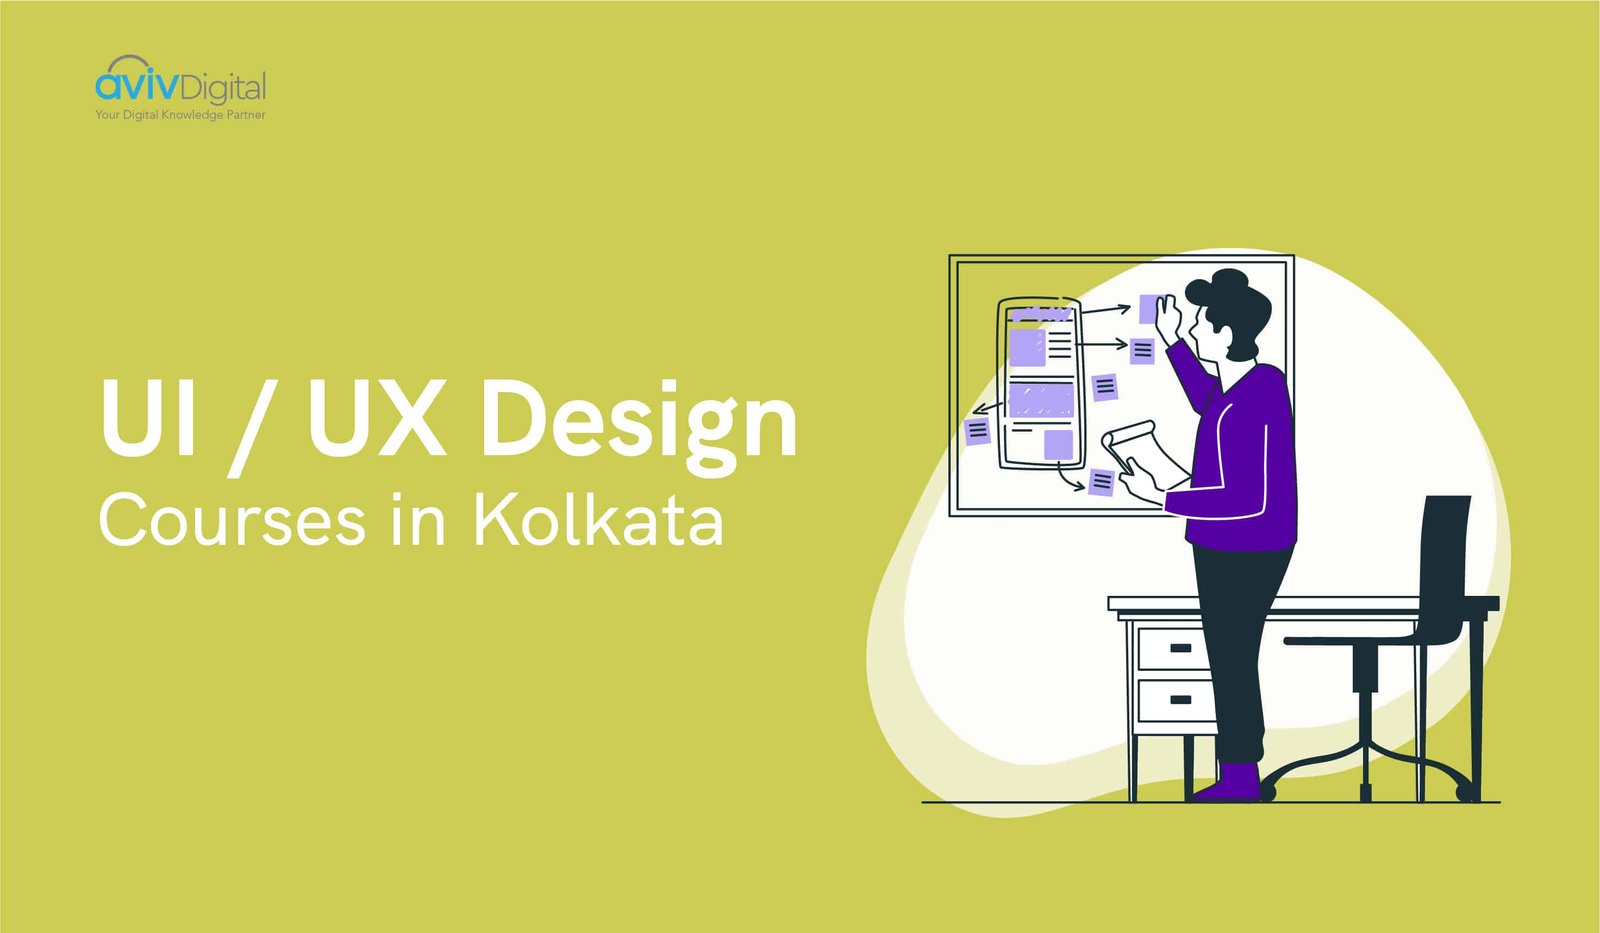 Best 5 UI and UX Design Courses in Kolkata